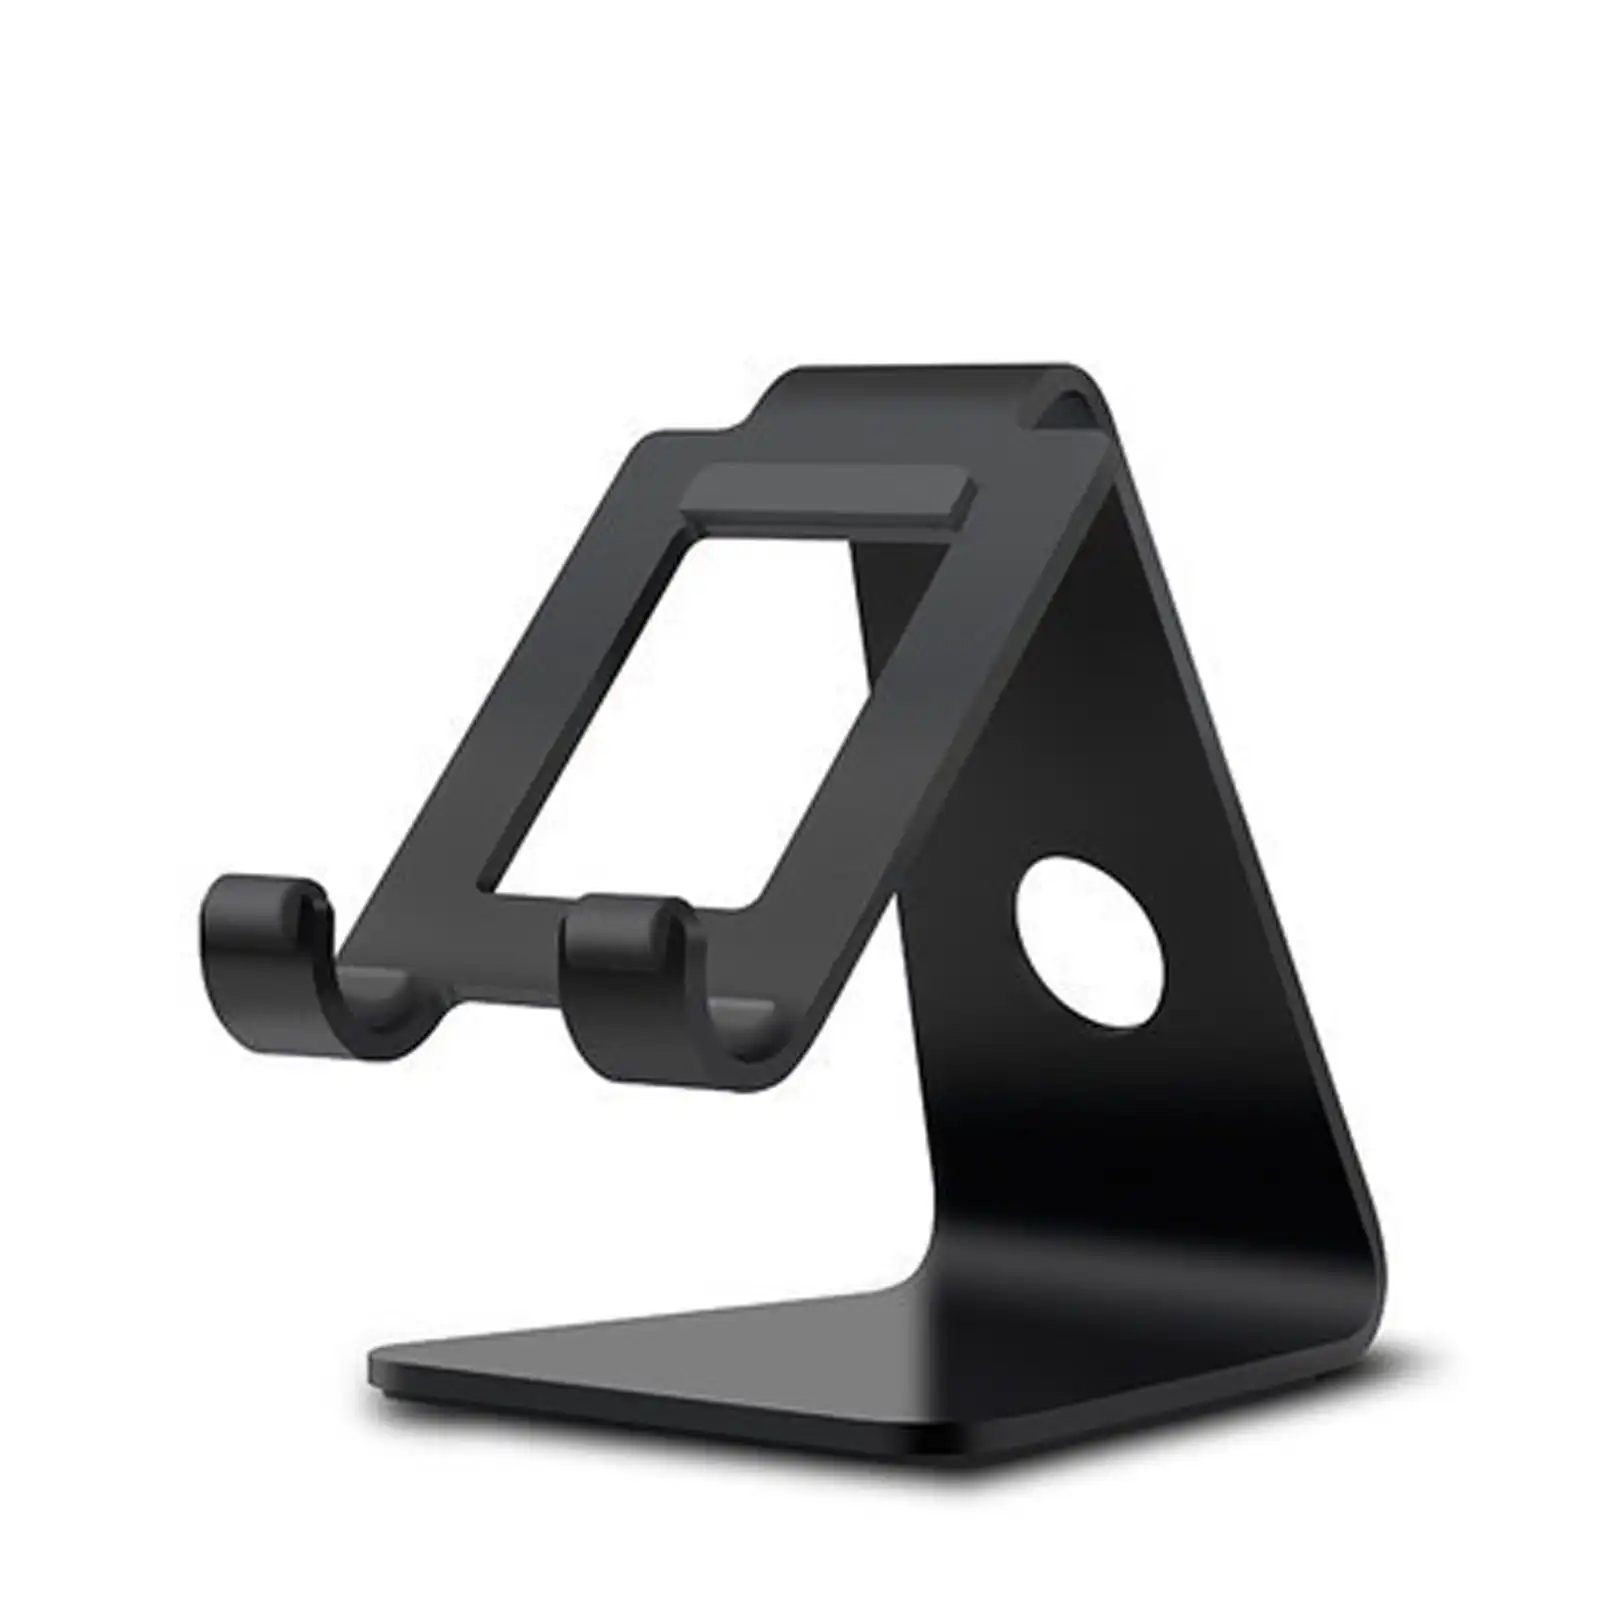 TODO Aluminium Alloy 3.5 - 8" Mobile Phone Tablet Stand Mount Holder iPad iPhone Anti-Slip - Black